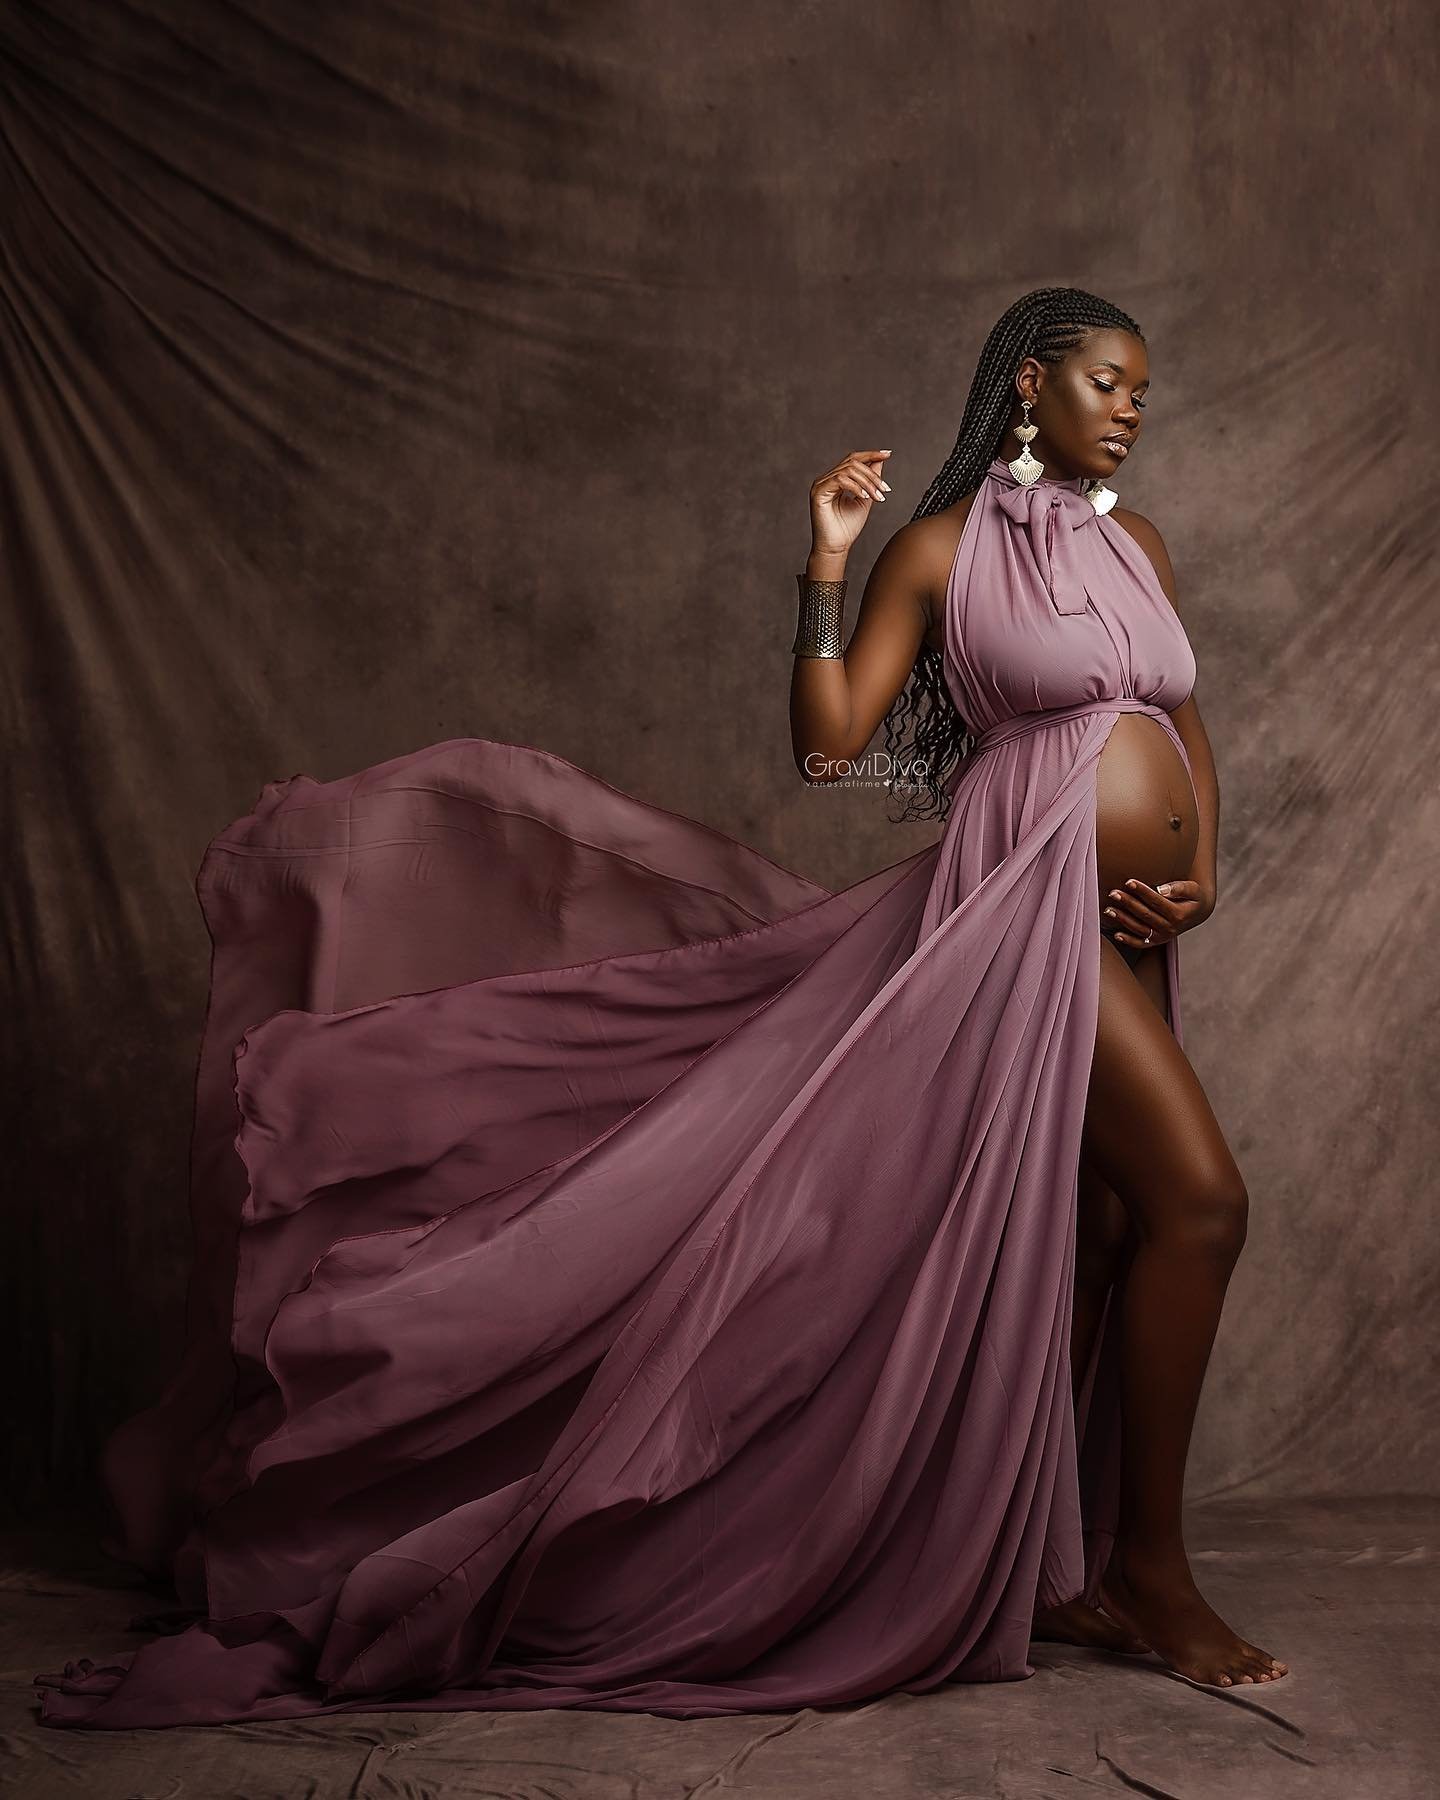 Gravidiva Vanessa Firma Fotografia Gestante de vestido roxo em estudio